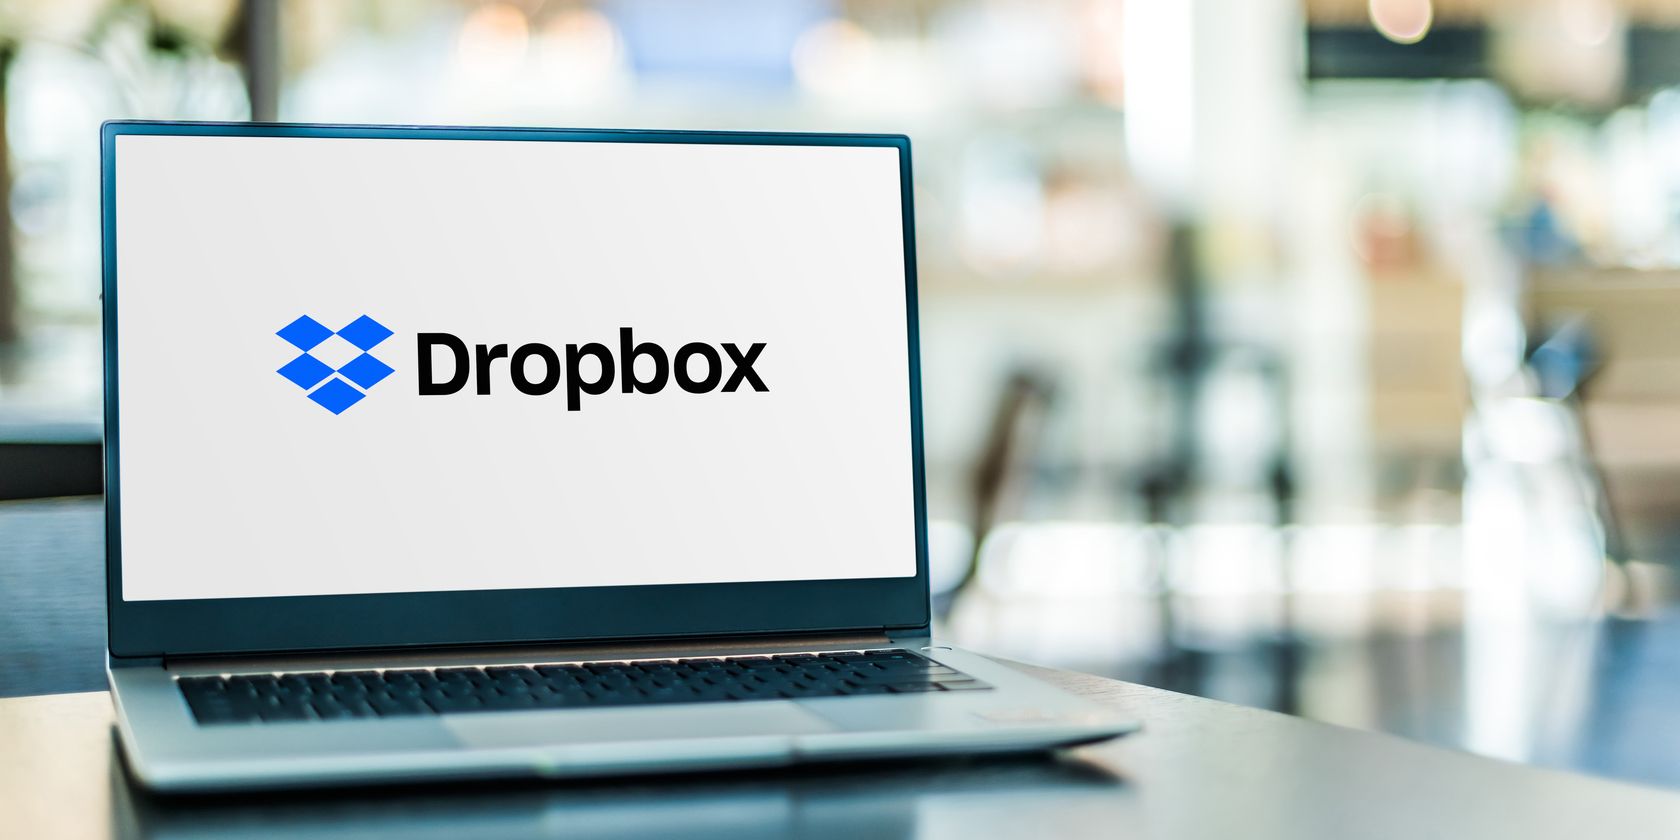 dropbox logo on laptop